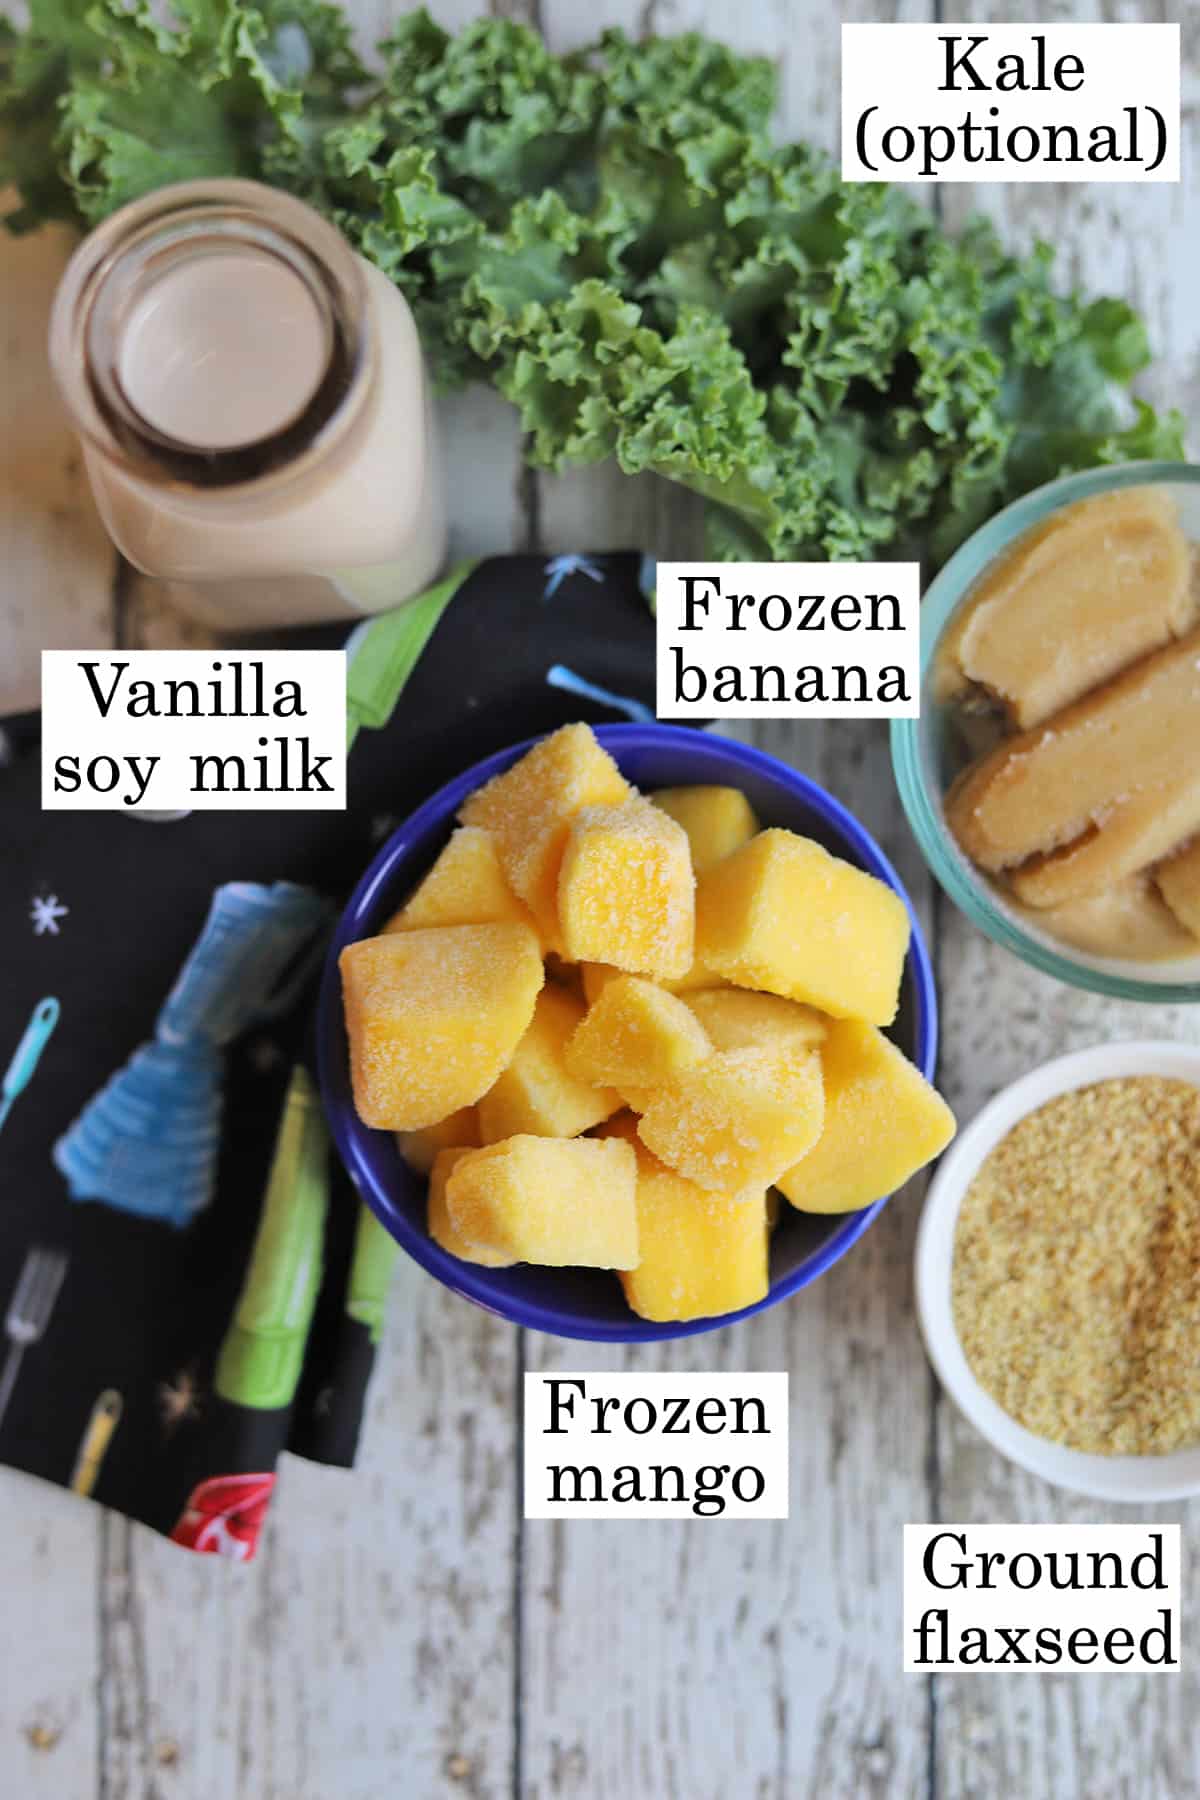 Labeled ingredients for vegan mango smoothie.